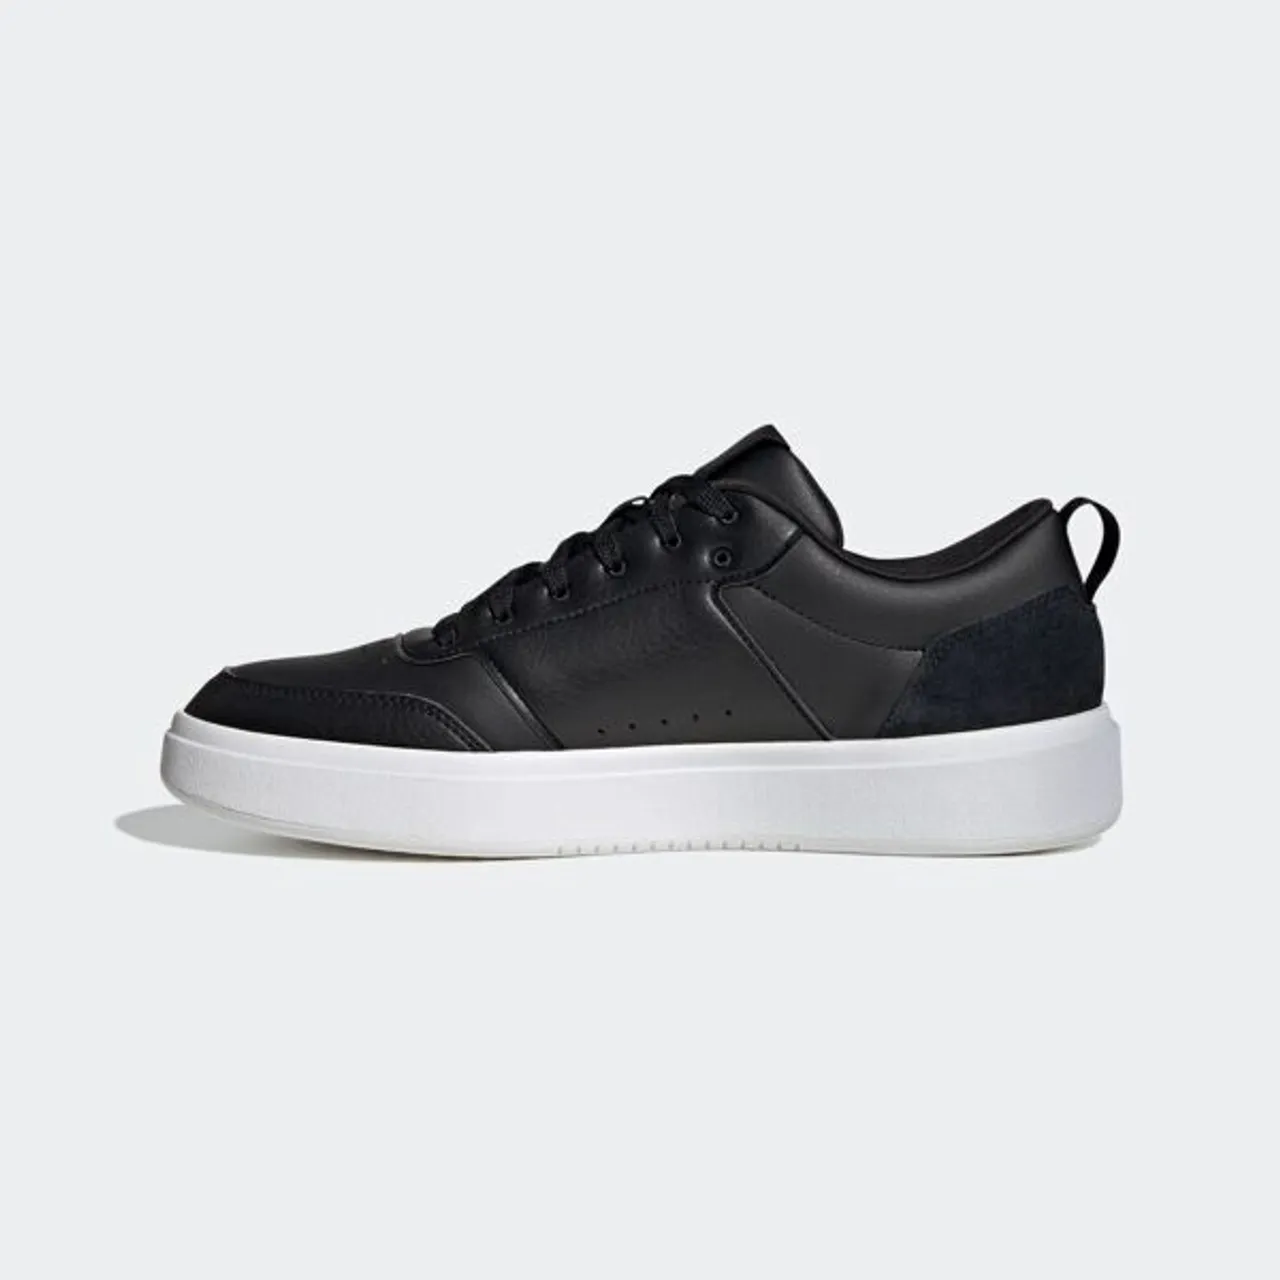 Sneaker ADIDAS SPORTSWEAR "PARK STREET" Gr. 46, schwarz-weiß (core black, core cloud white) Schuhe Schnürhalbschuhe